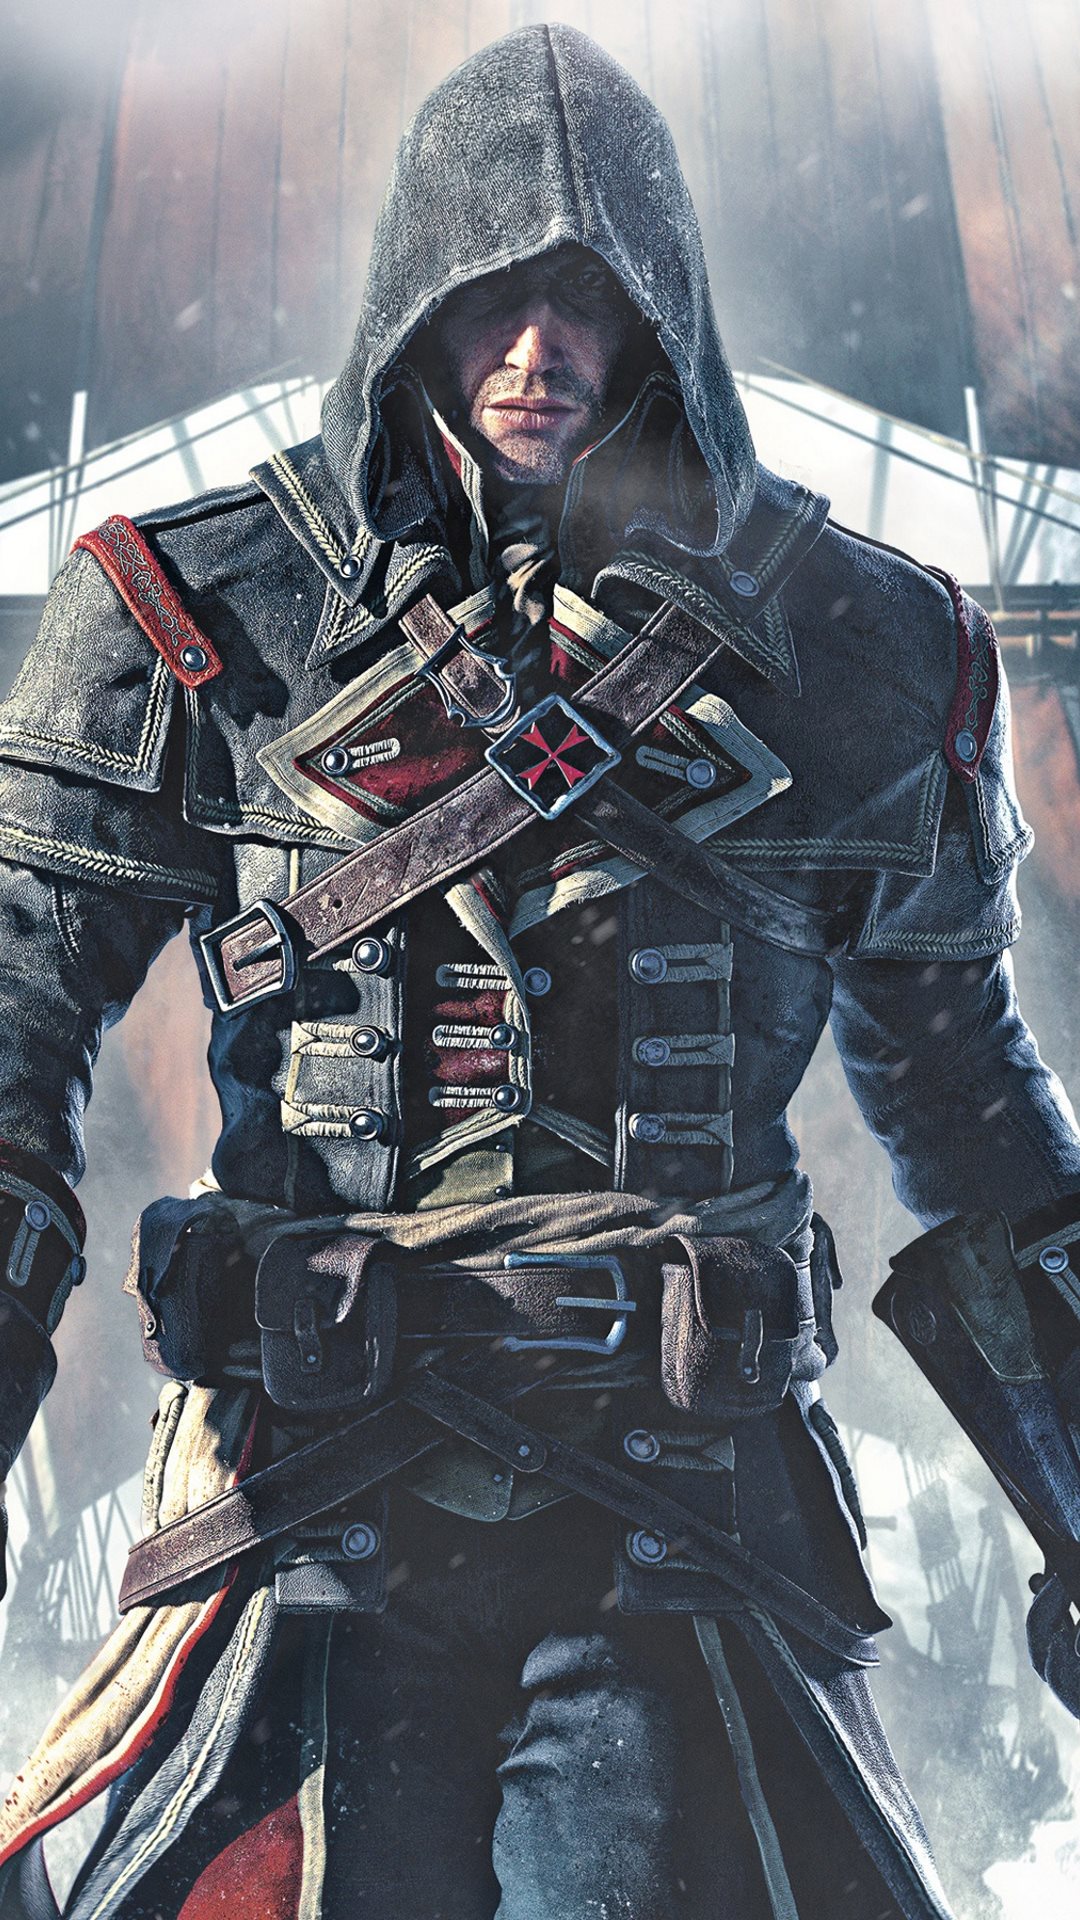 Assassin's Creed Rogue Wallpaper by BriellaLove on DeviantArt